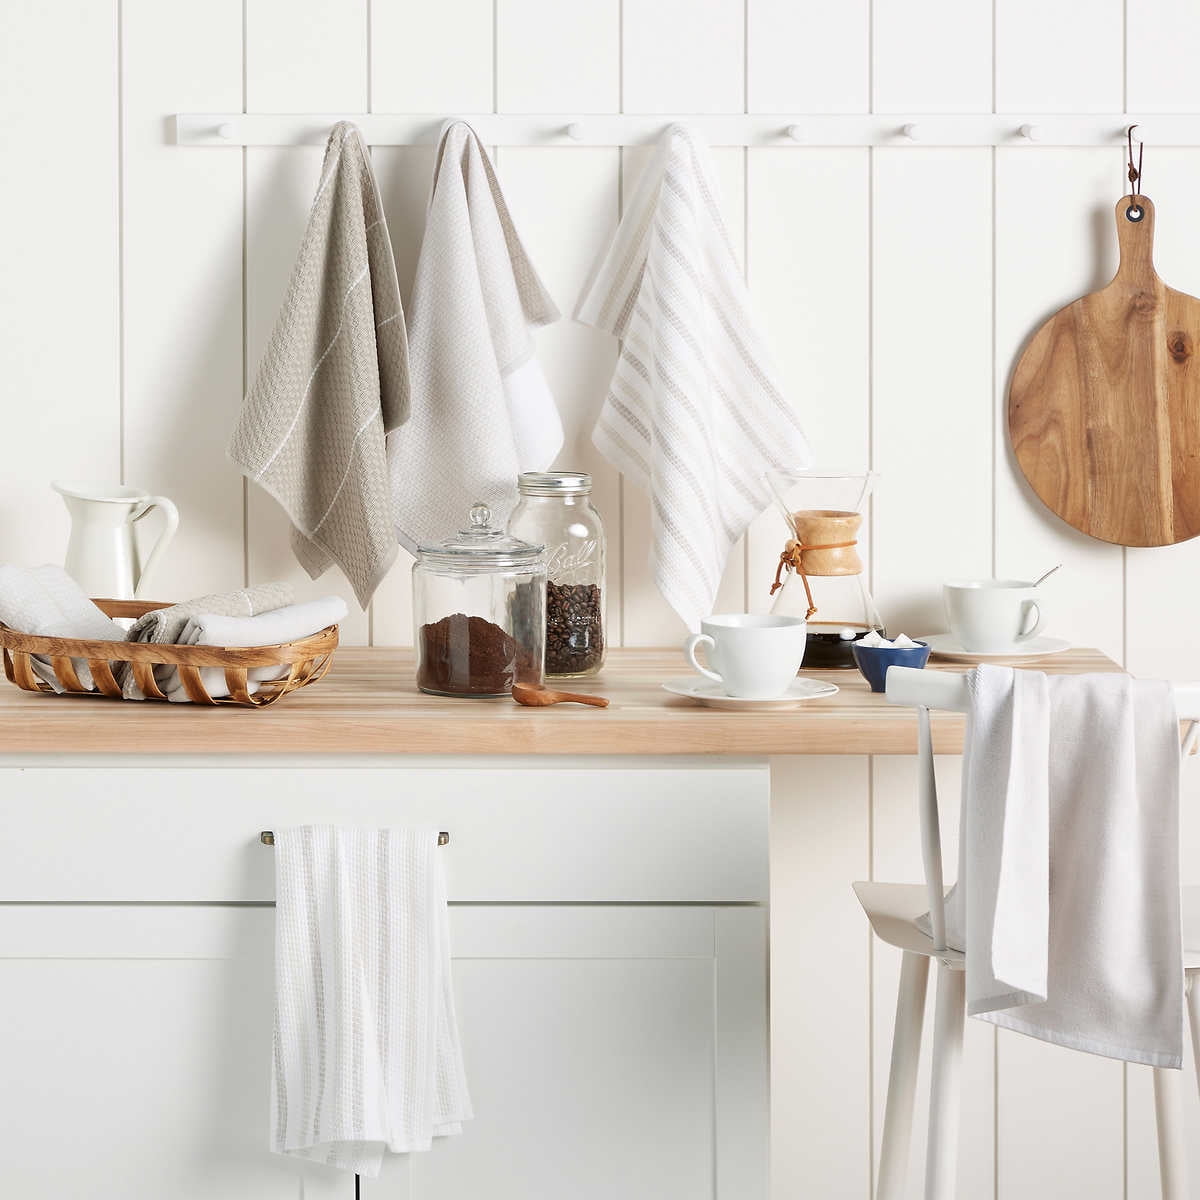 Organic 8-piece Kitchen Towel Set